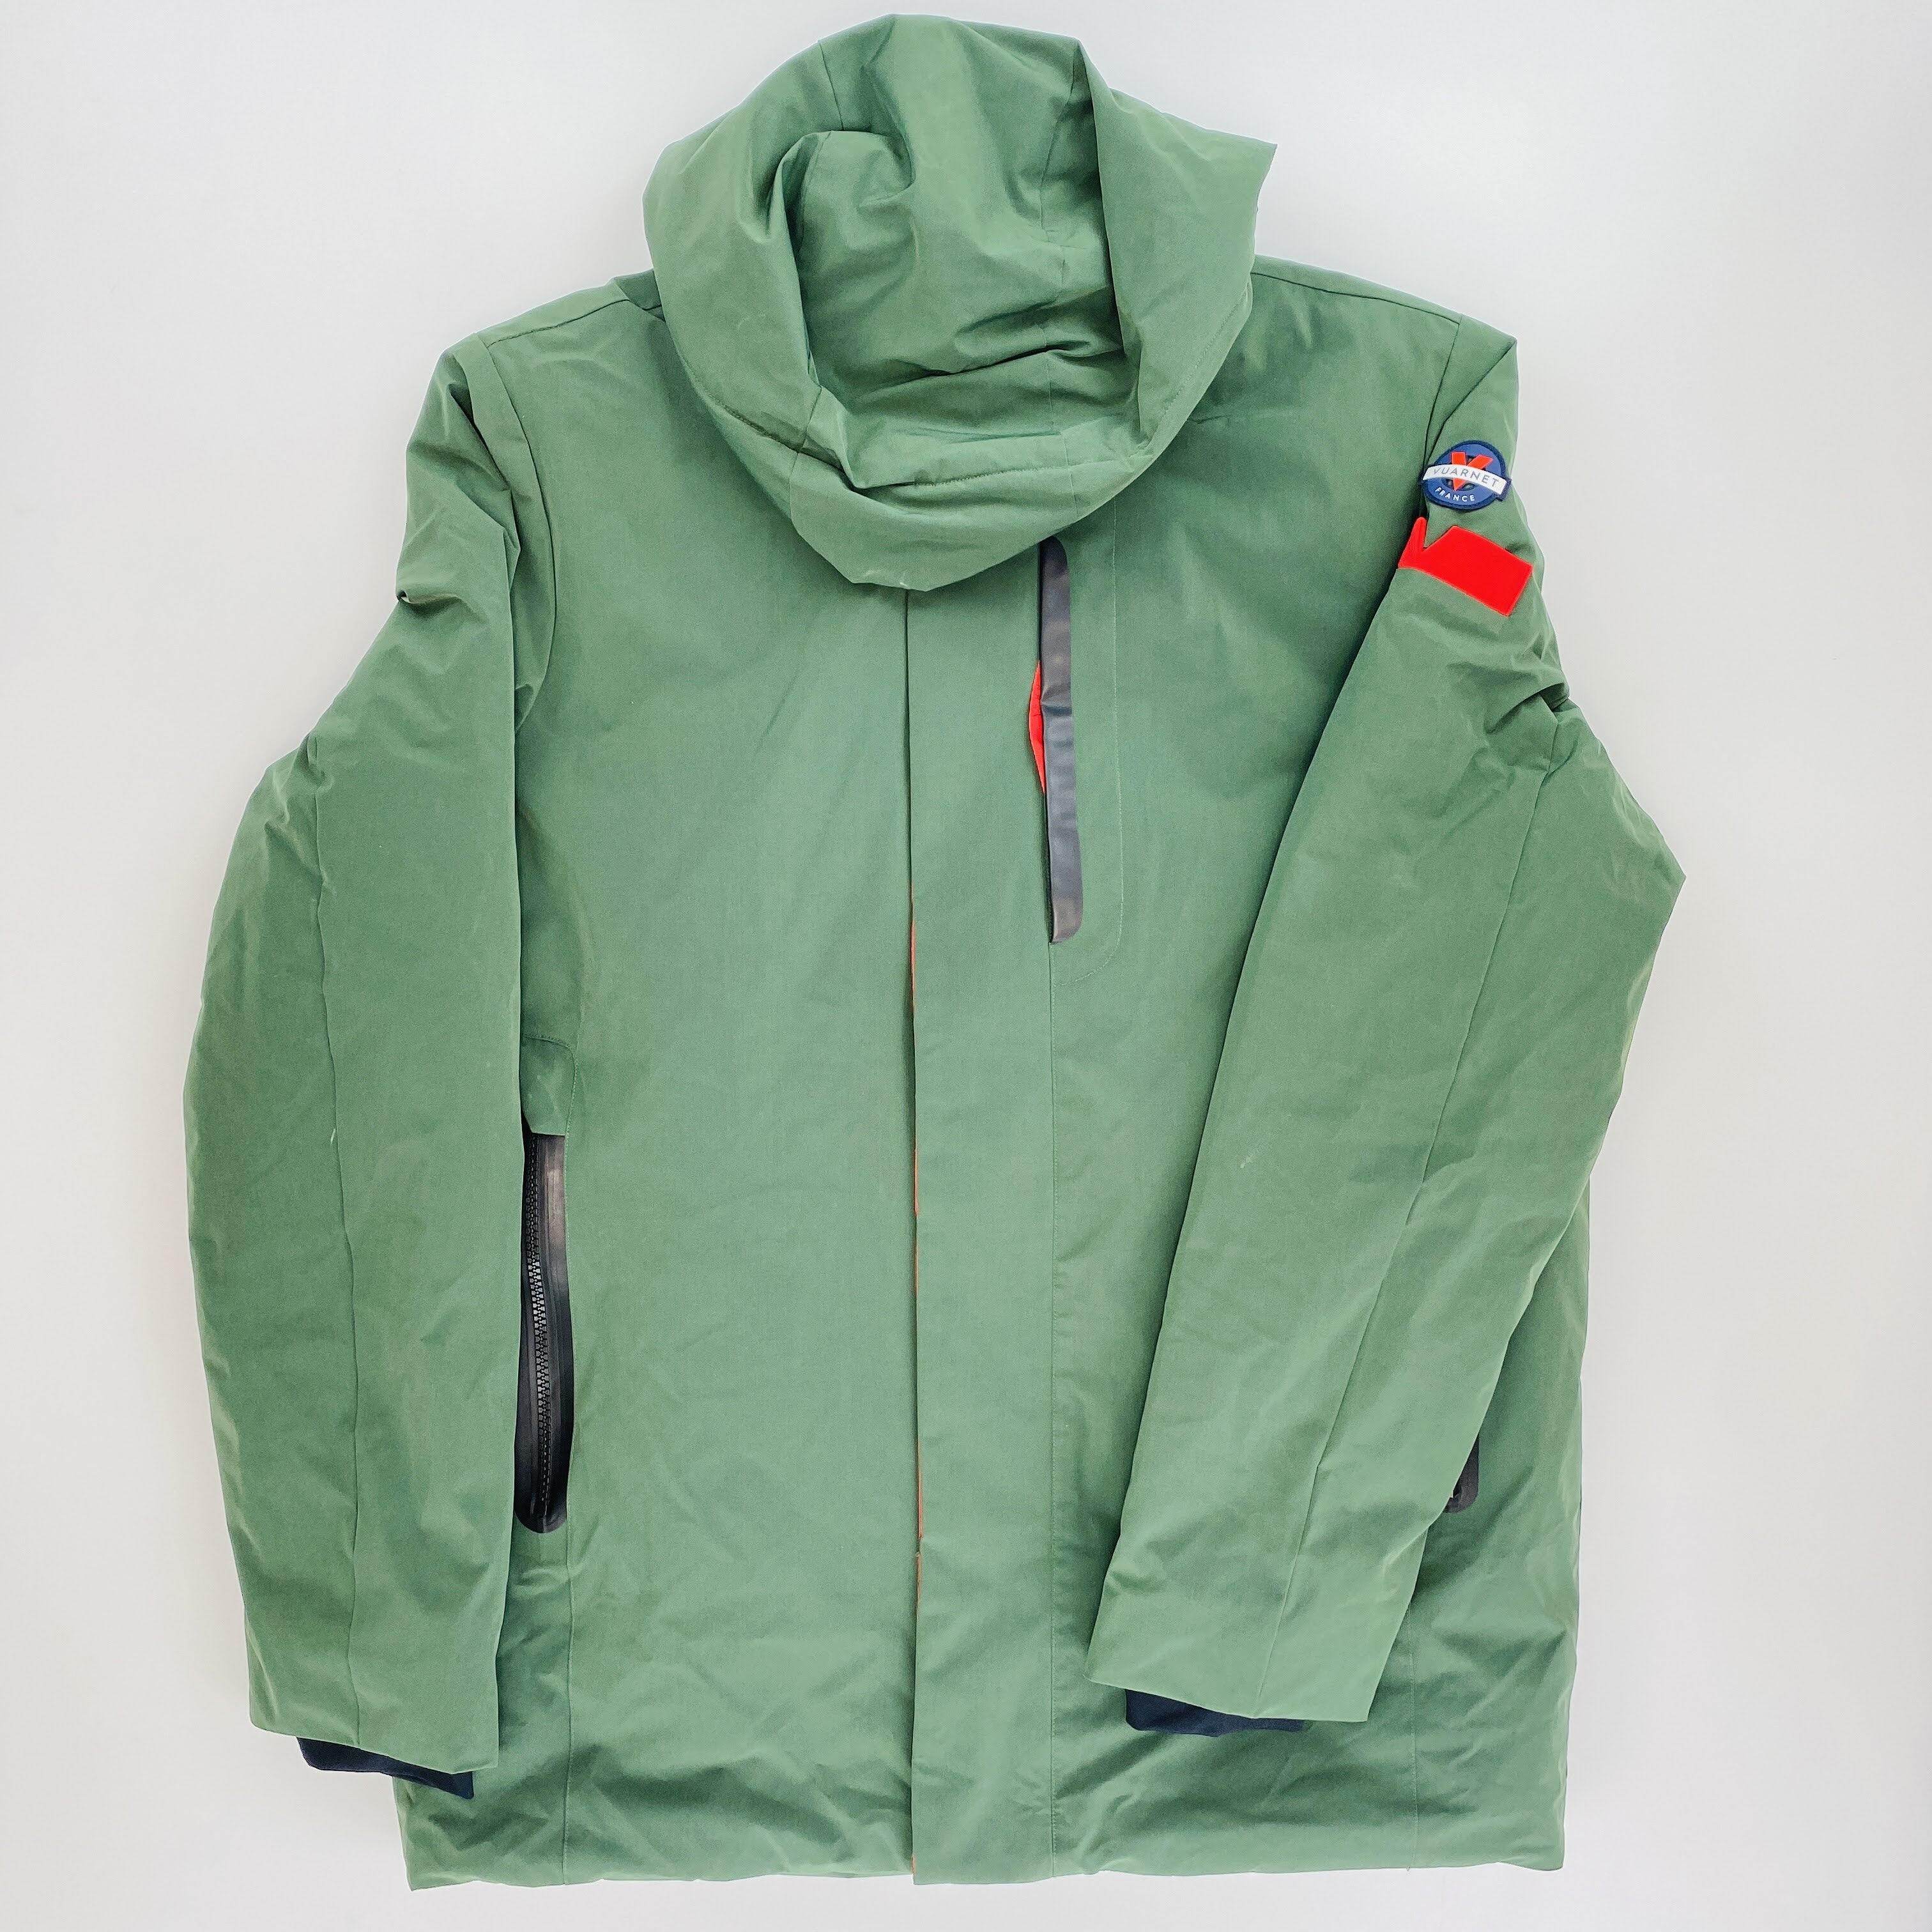 Vuarnet Orta Jacket - Giacca sintetica di seconda mano - Uomo - Verde - L | Hardloop